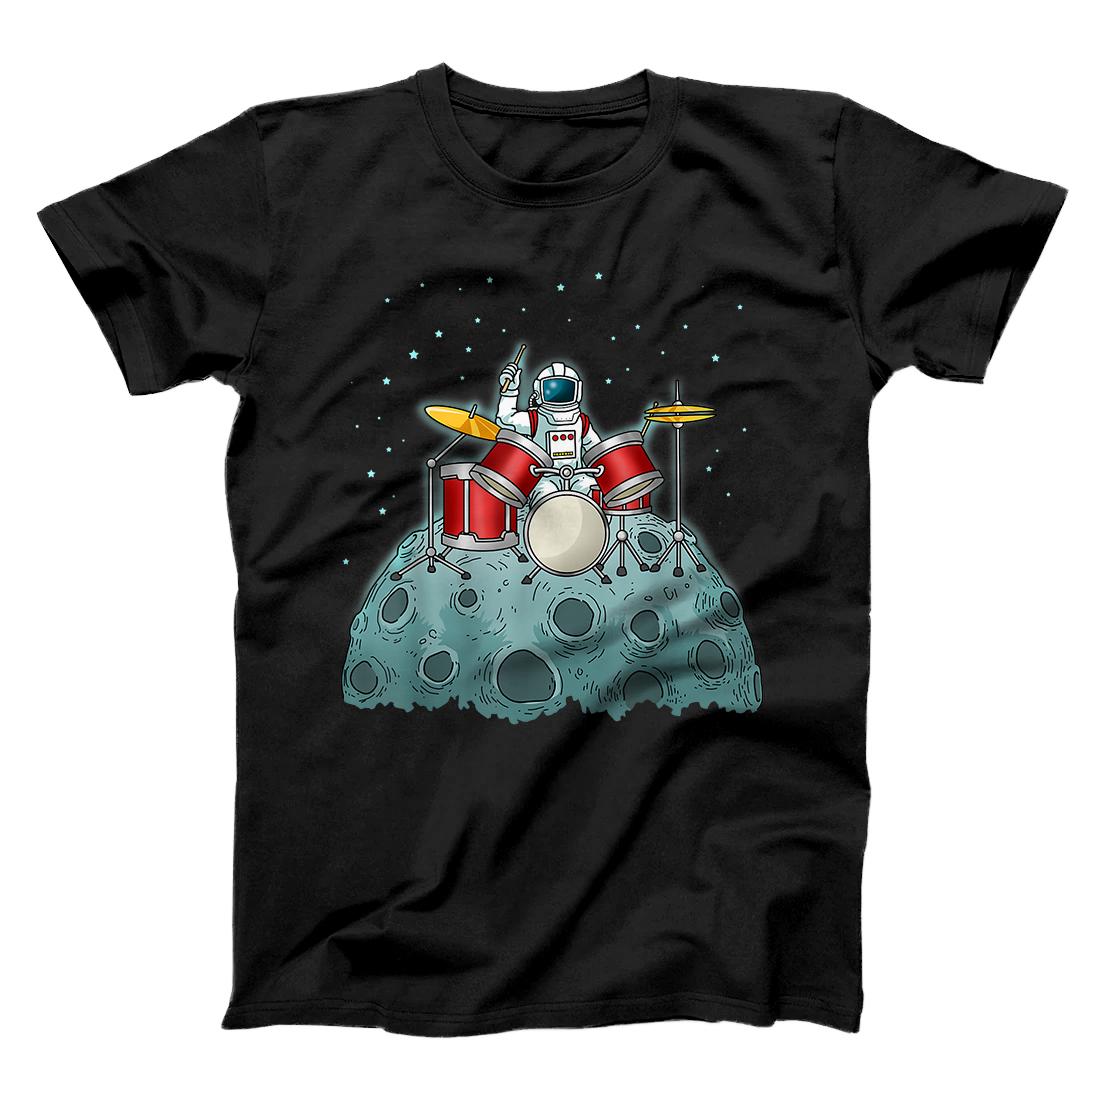 Personalized Drummer Shirt Kids Drummer Gift Drumming Shirt Percussion T-Shirt